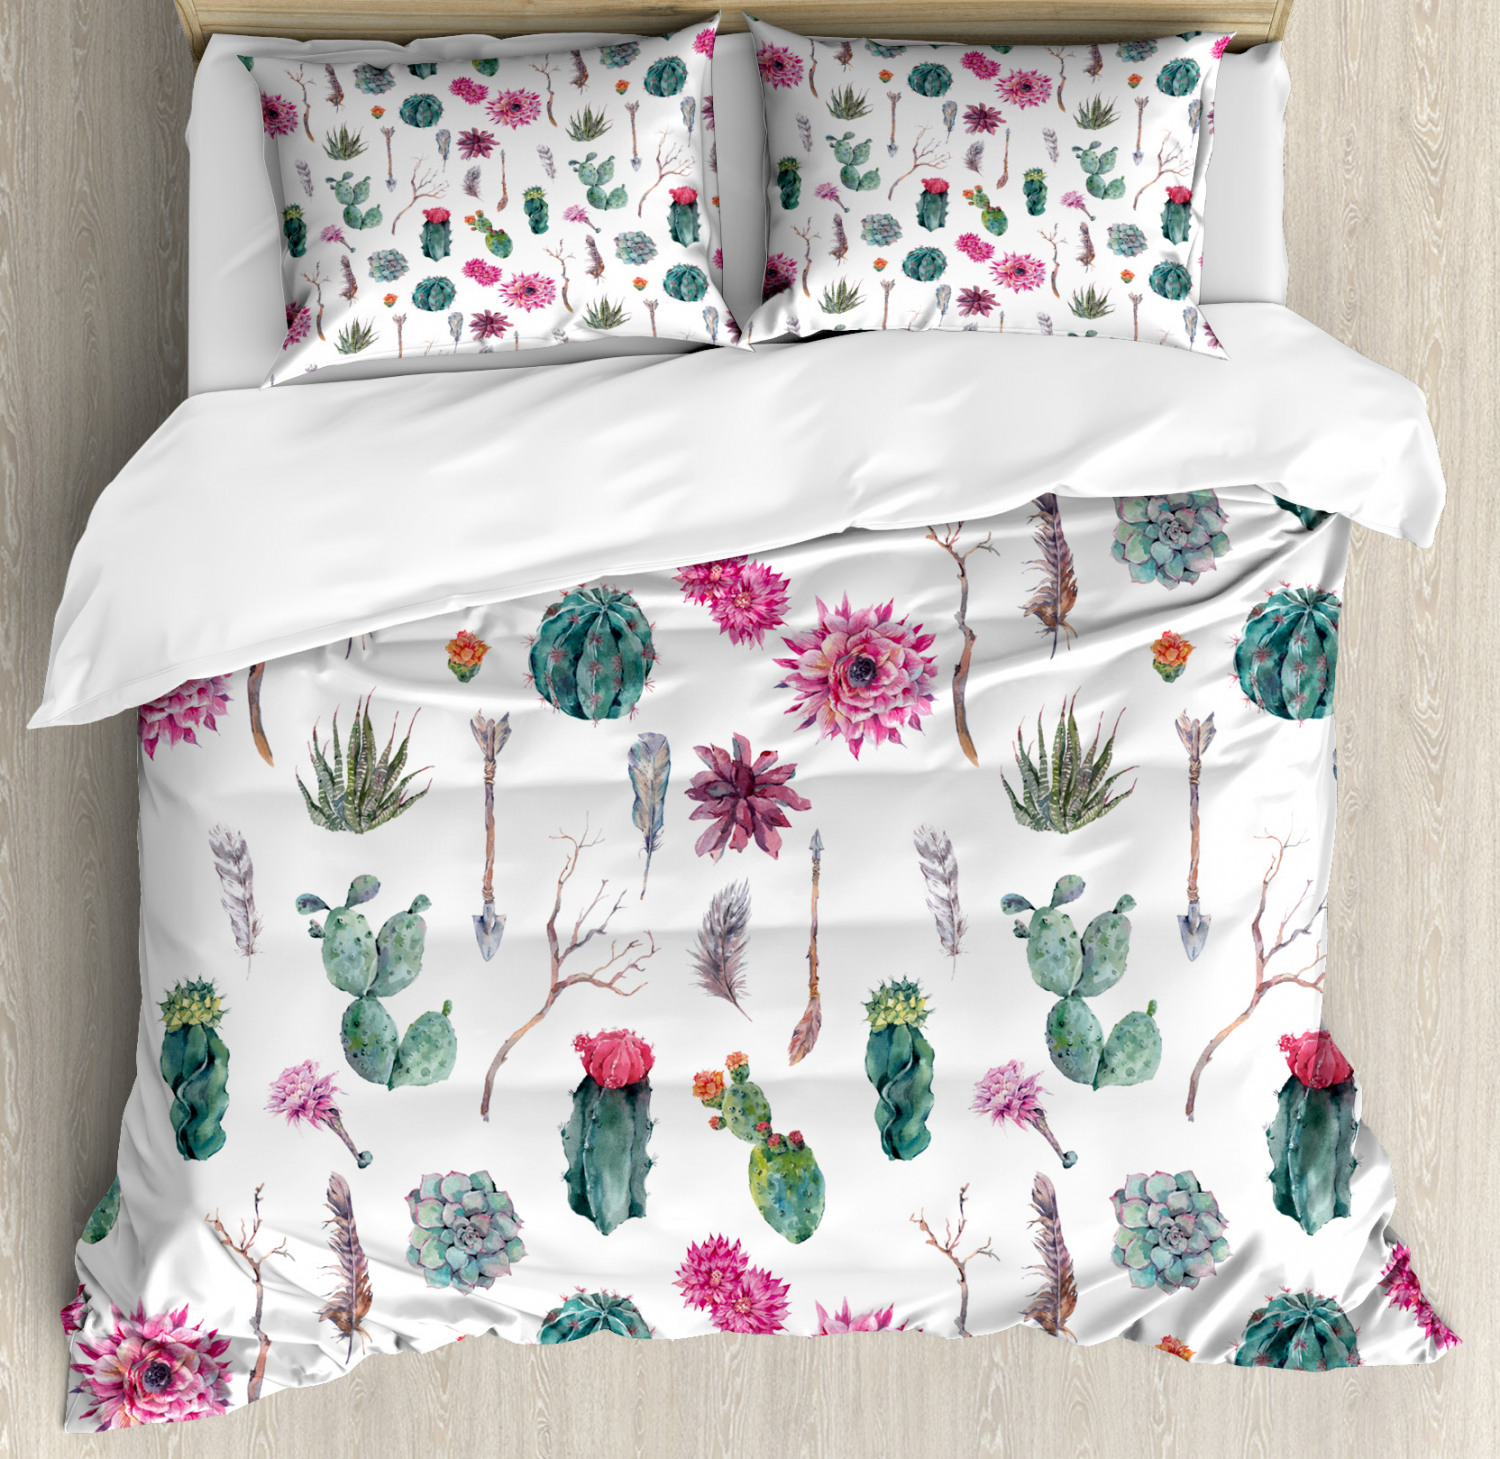 Cactus Duvet Cover Set With Pillow Shams Springtime In Hawaii